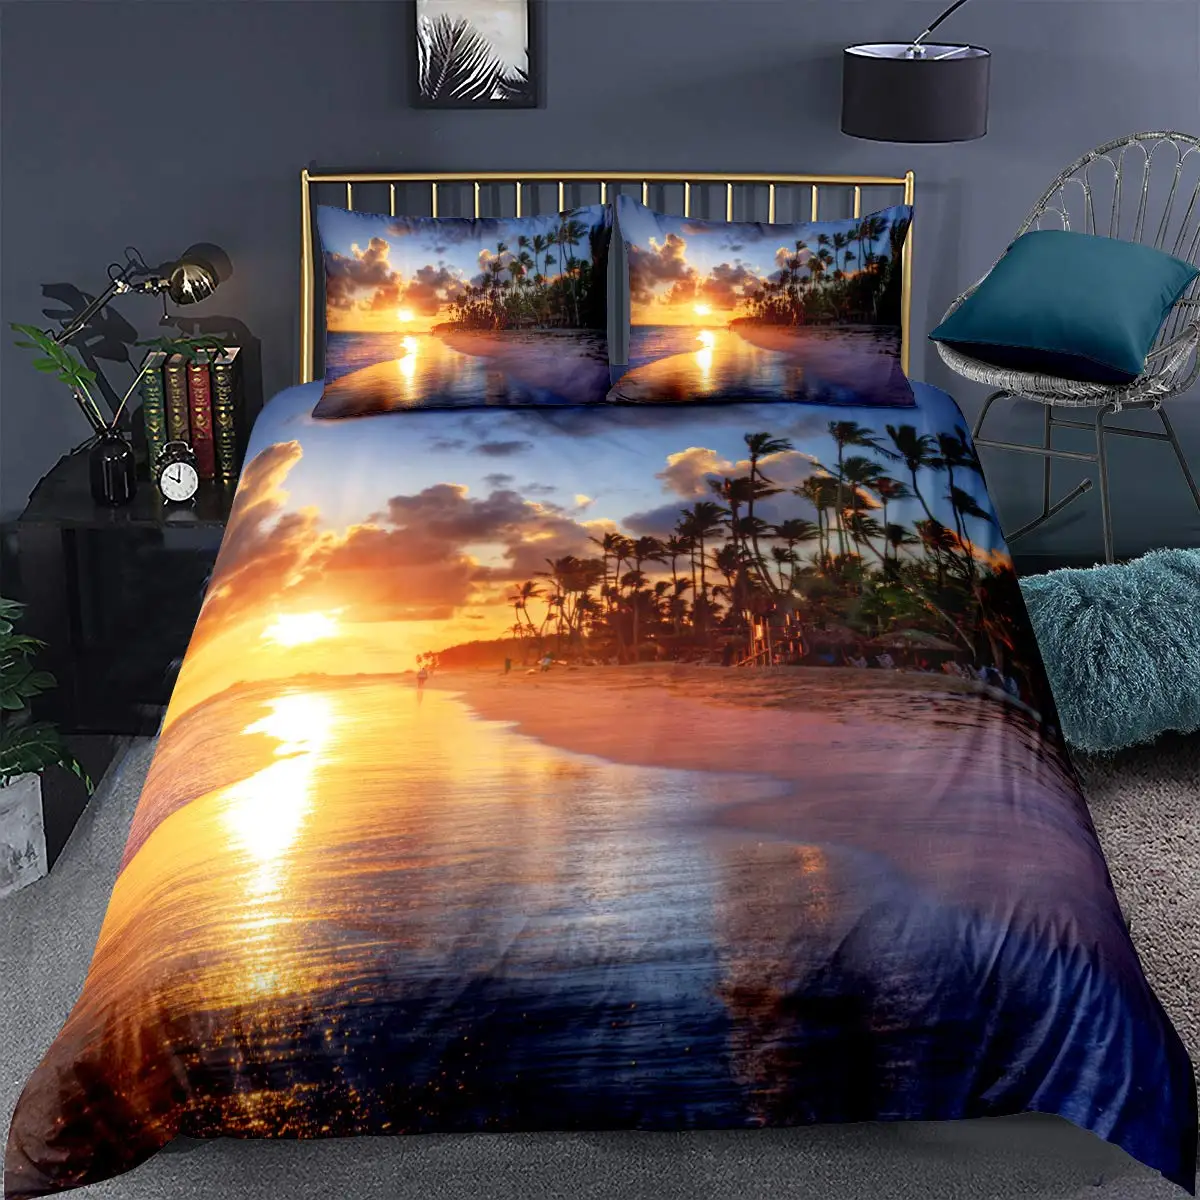 

Bedding Set Hawai Tropical Palm Tree Nature Polyester Comforter Cover Beach Duvet Cover Set King/Queen Size Summer Sea Ocean